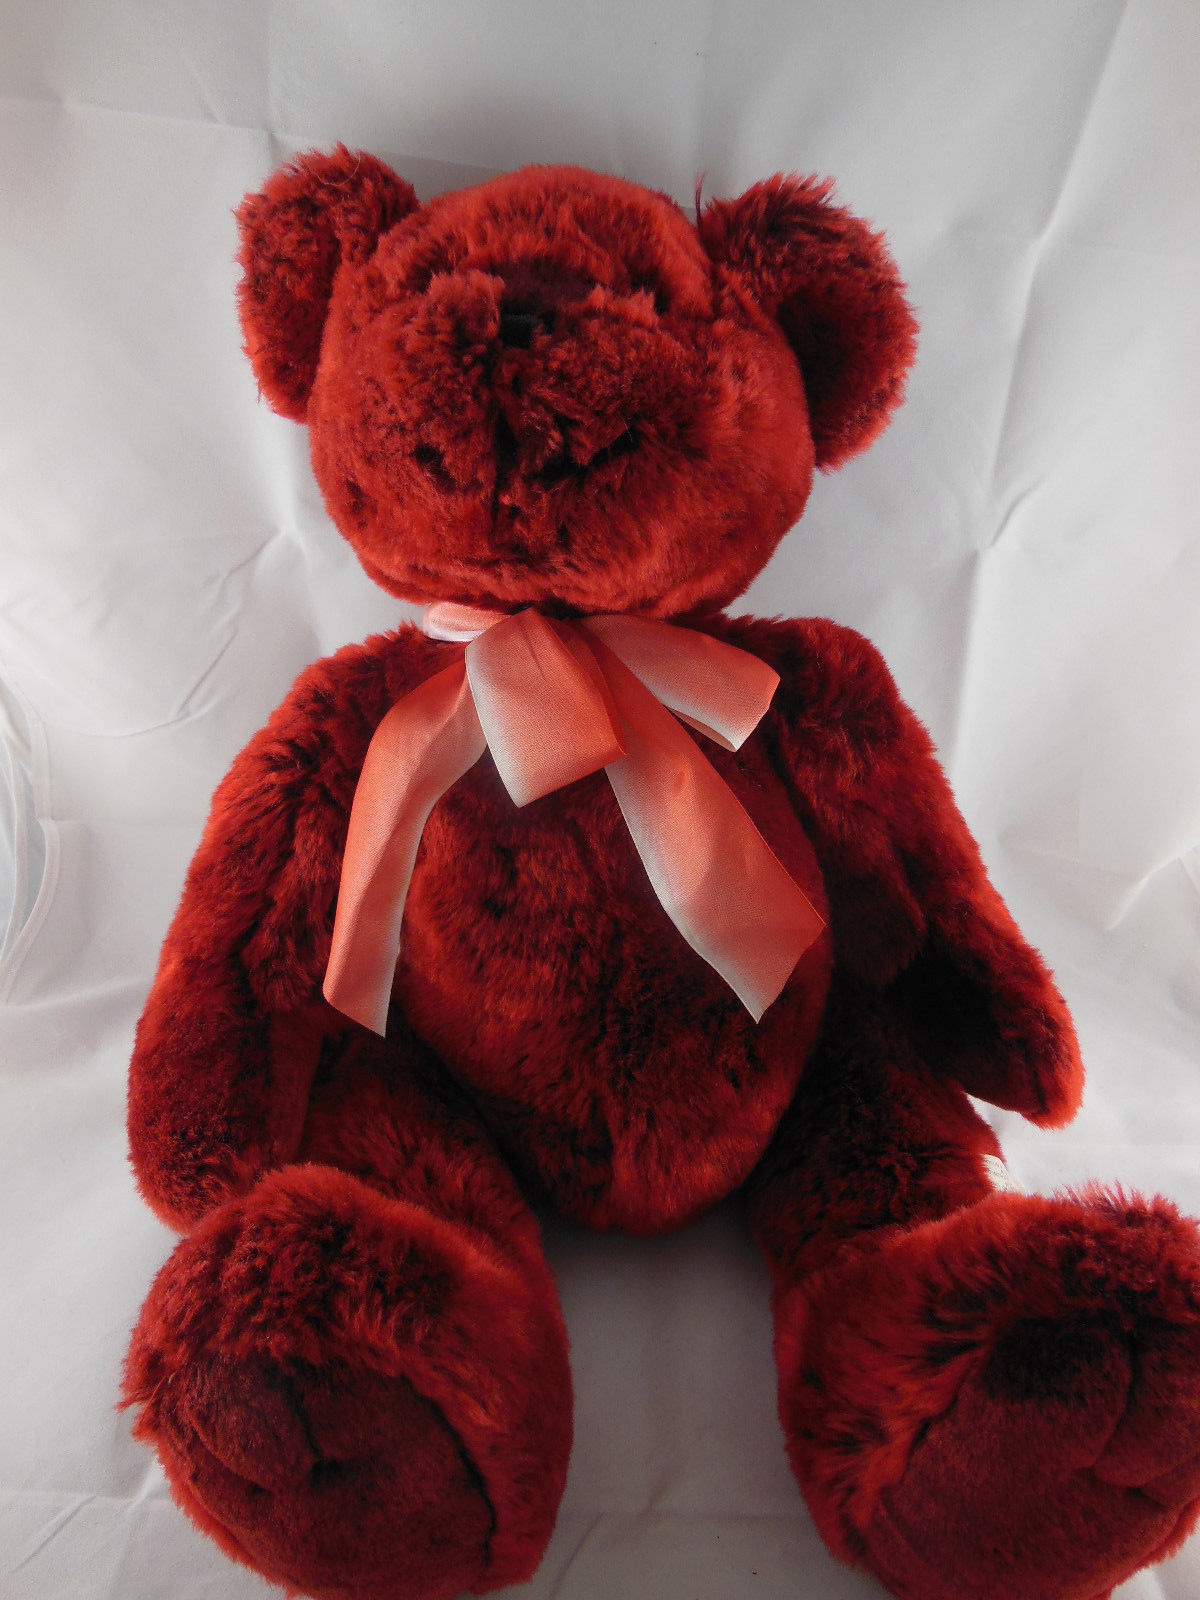 Chosun 20" Teddy Bear Dark red cranberry wine burgundy  Vintage Plush stuffed - $19.23